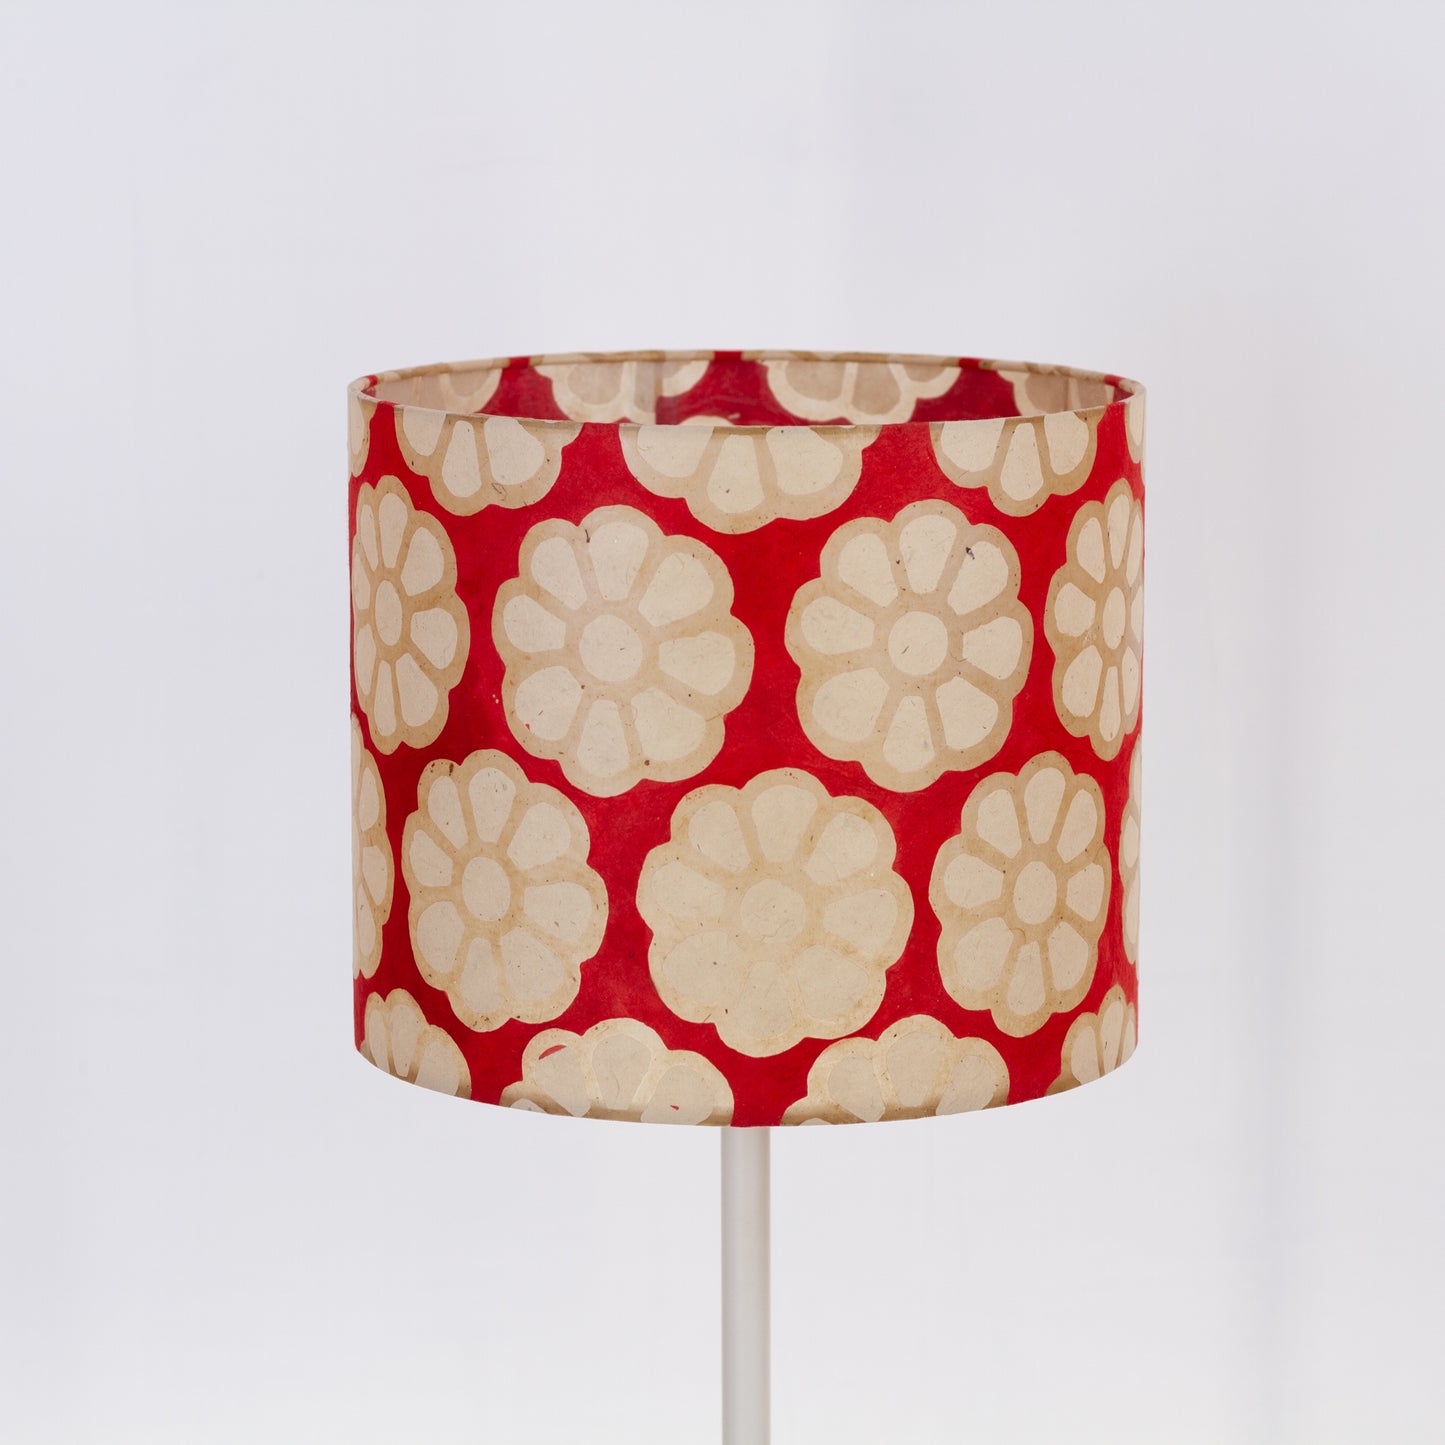 Drum Lamp Shade - P18 - Batik Big Flower on Red, 30cm(d) x 25cm(h)